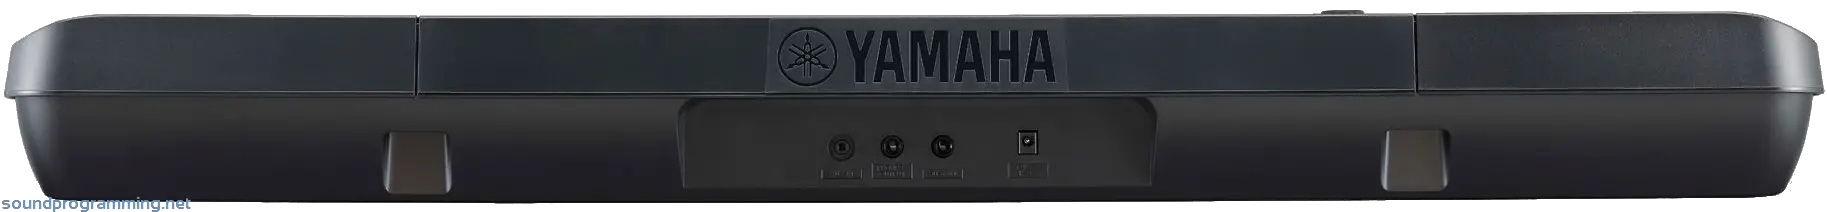 Yamaha PSR-E273 Back View